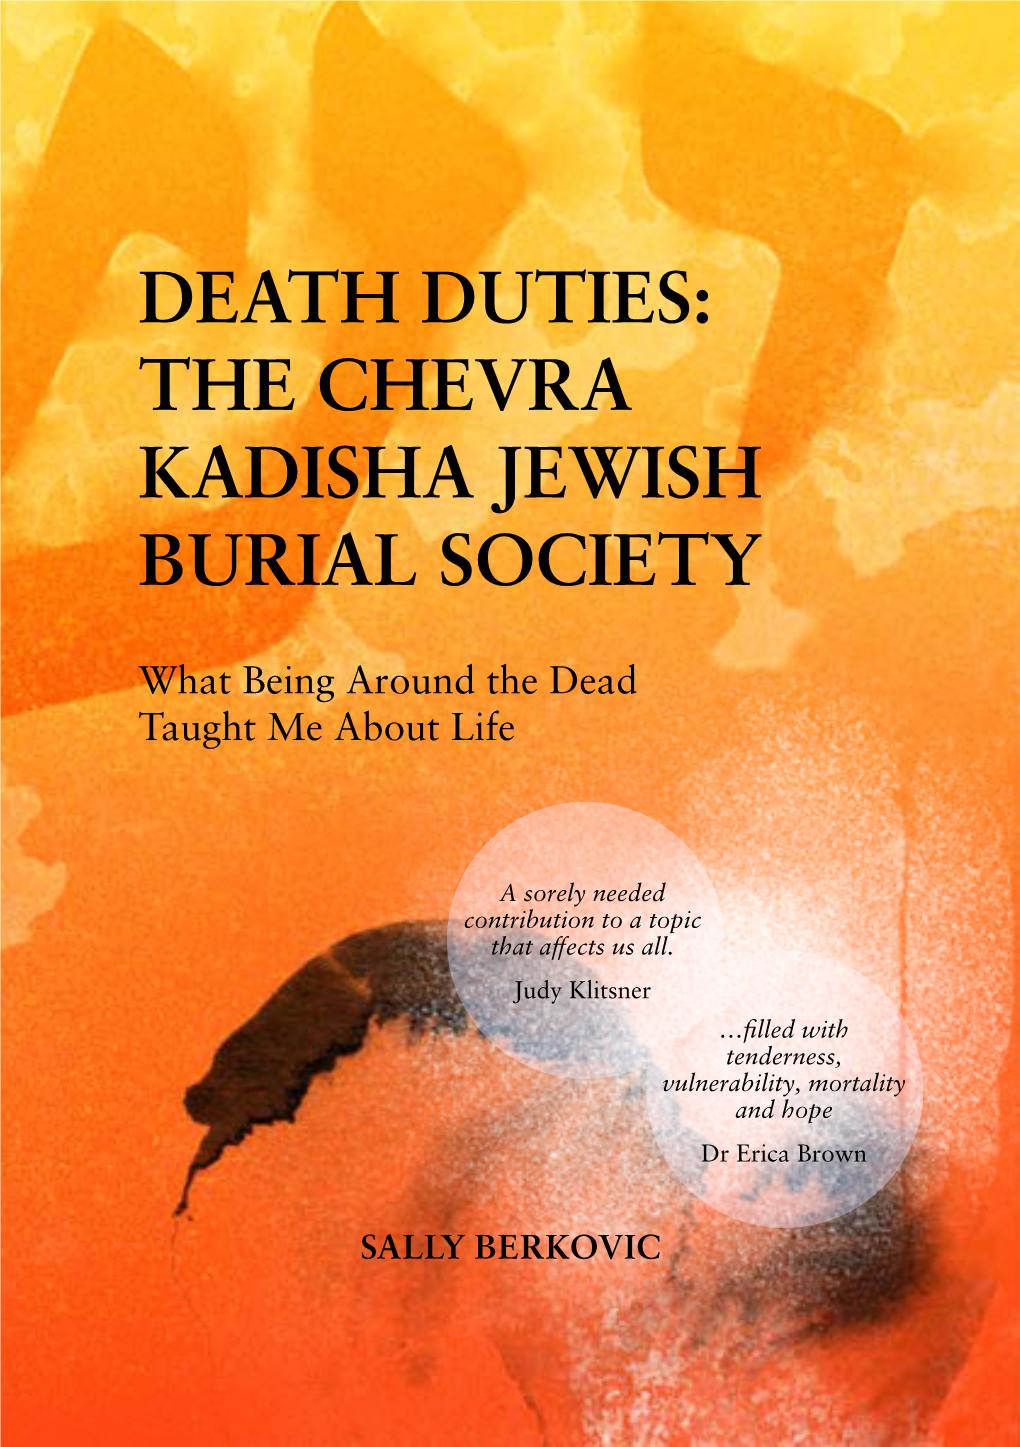 The Chevra Kadisha Jewish Burial Society